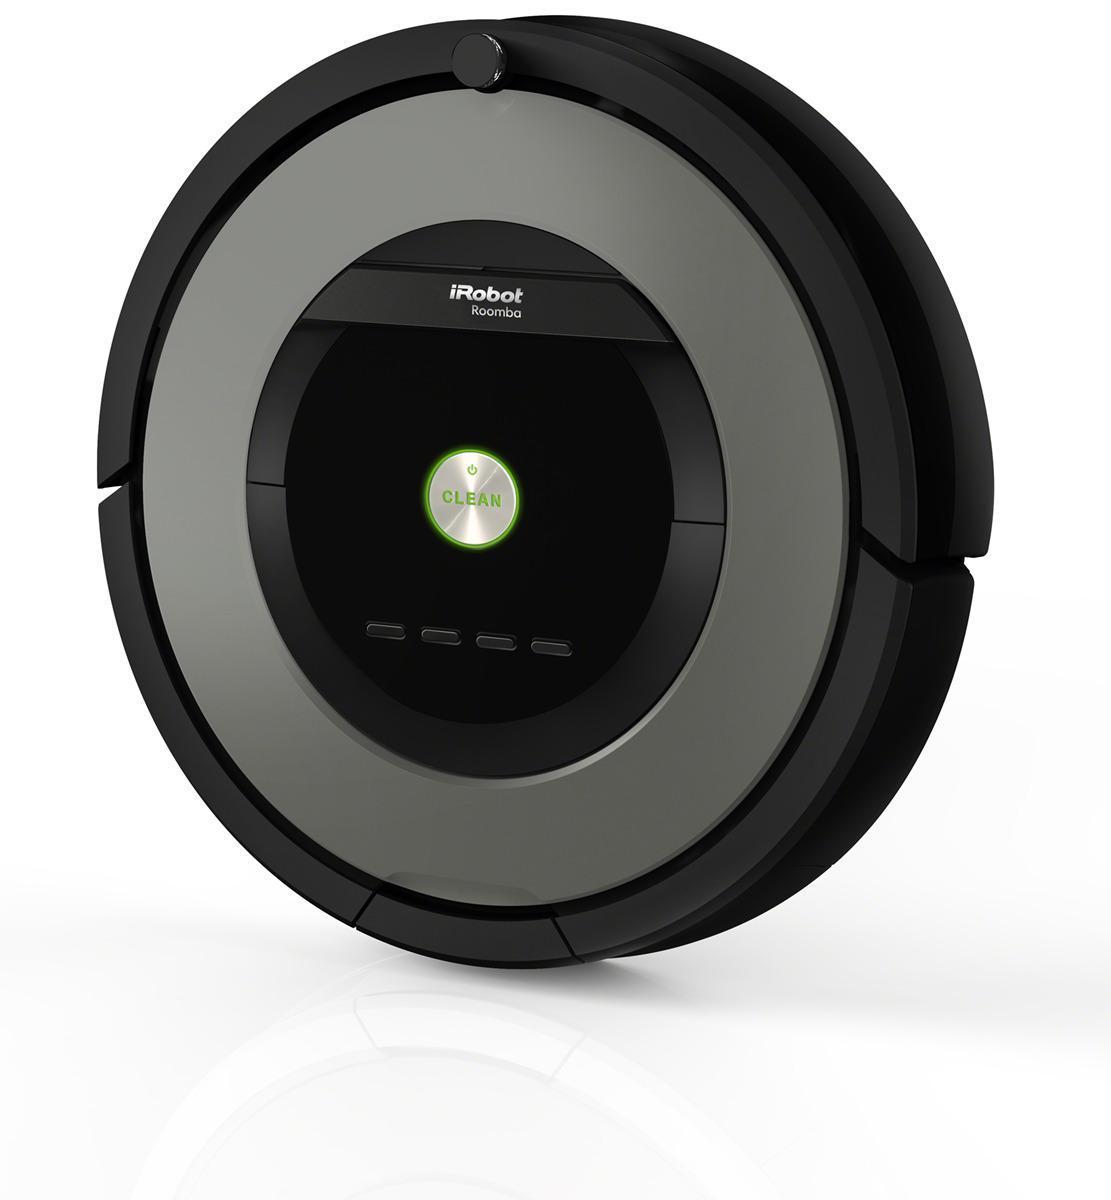 iRobot Roomba 866 - Smart smartphone control